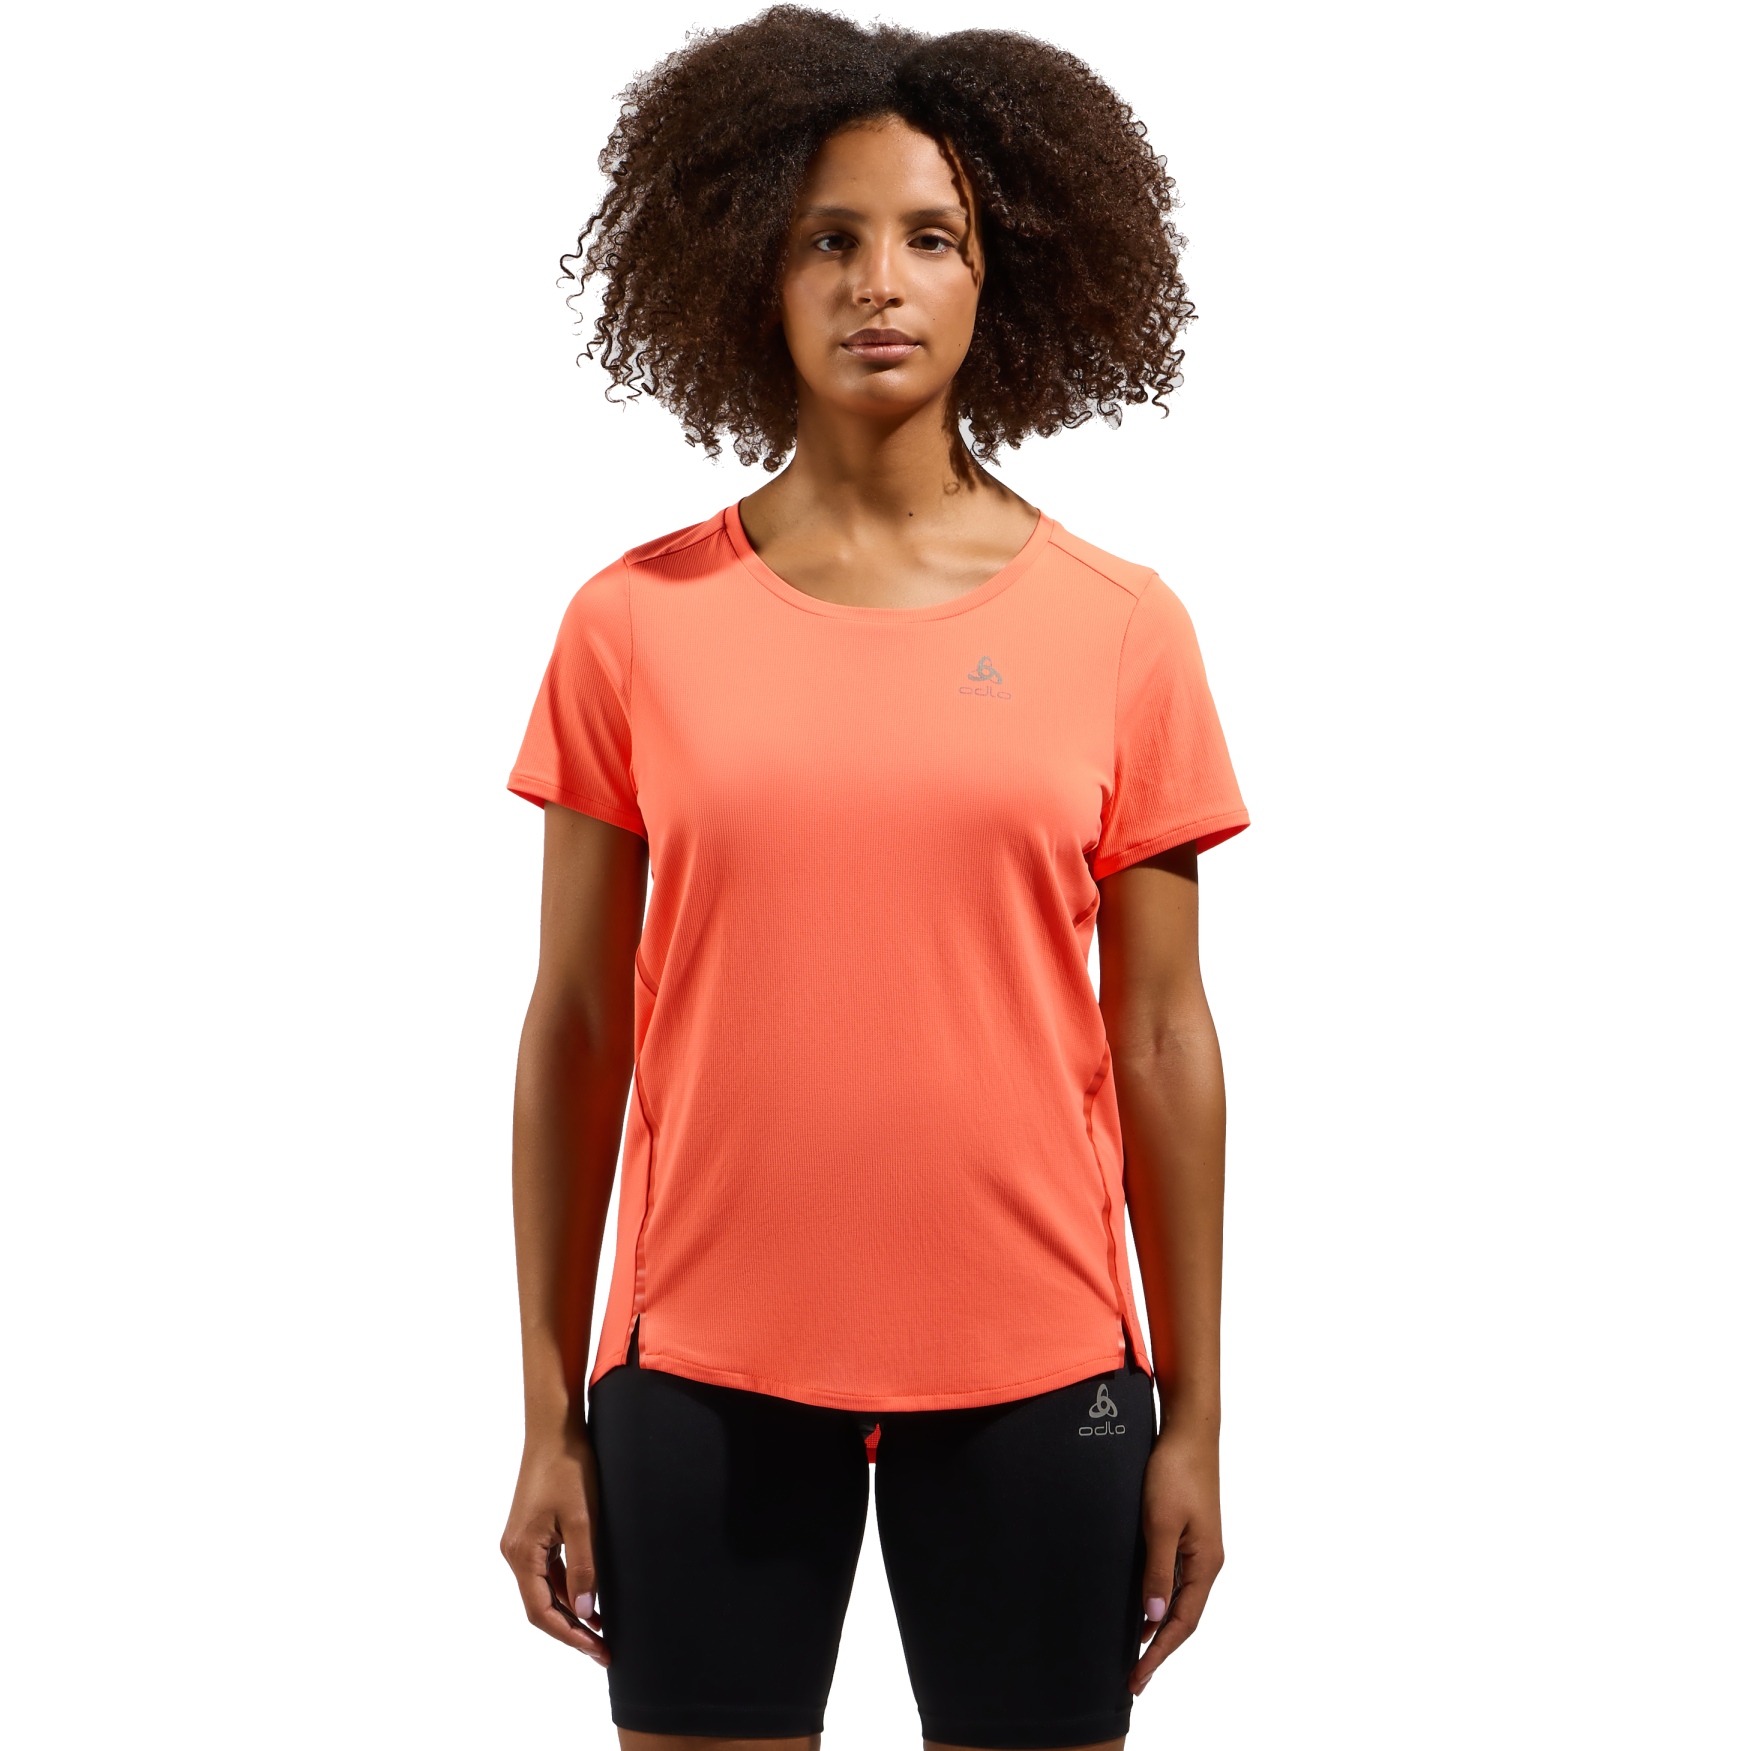 Produktbild von Odlo Zeroweight Chill-Tec T-Shirt Damen - living coral